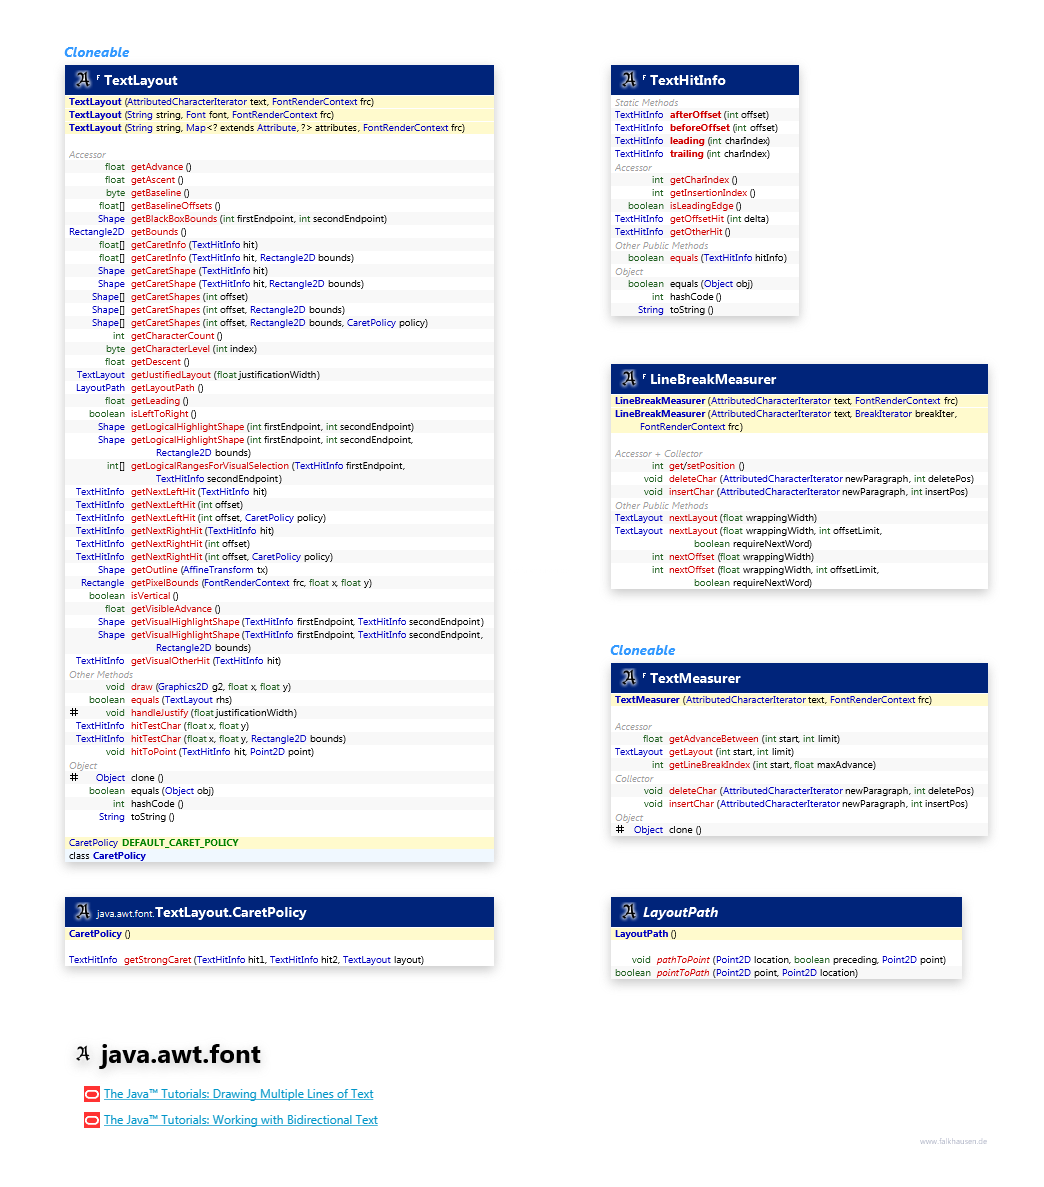 java.awt.font TextLayout class diagram and api documentation for Java 8